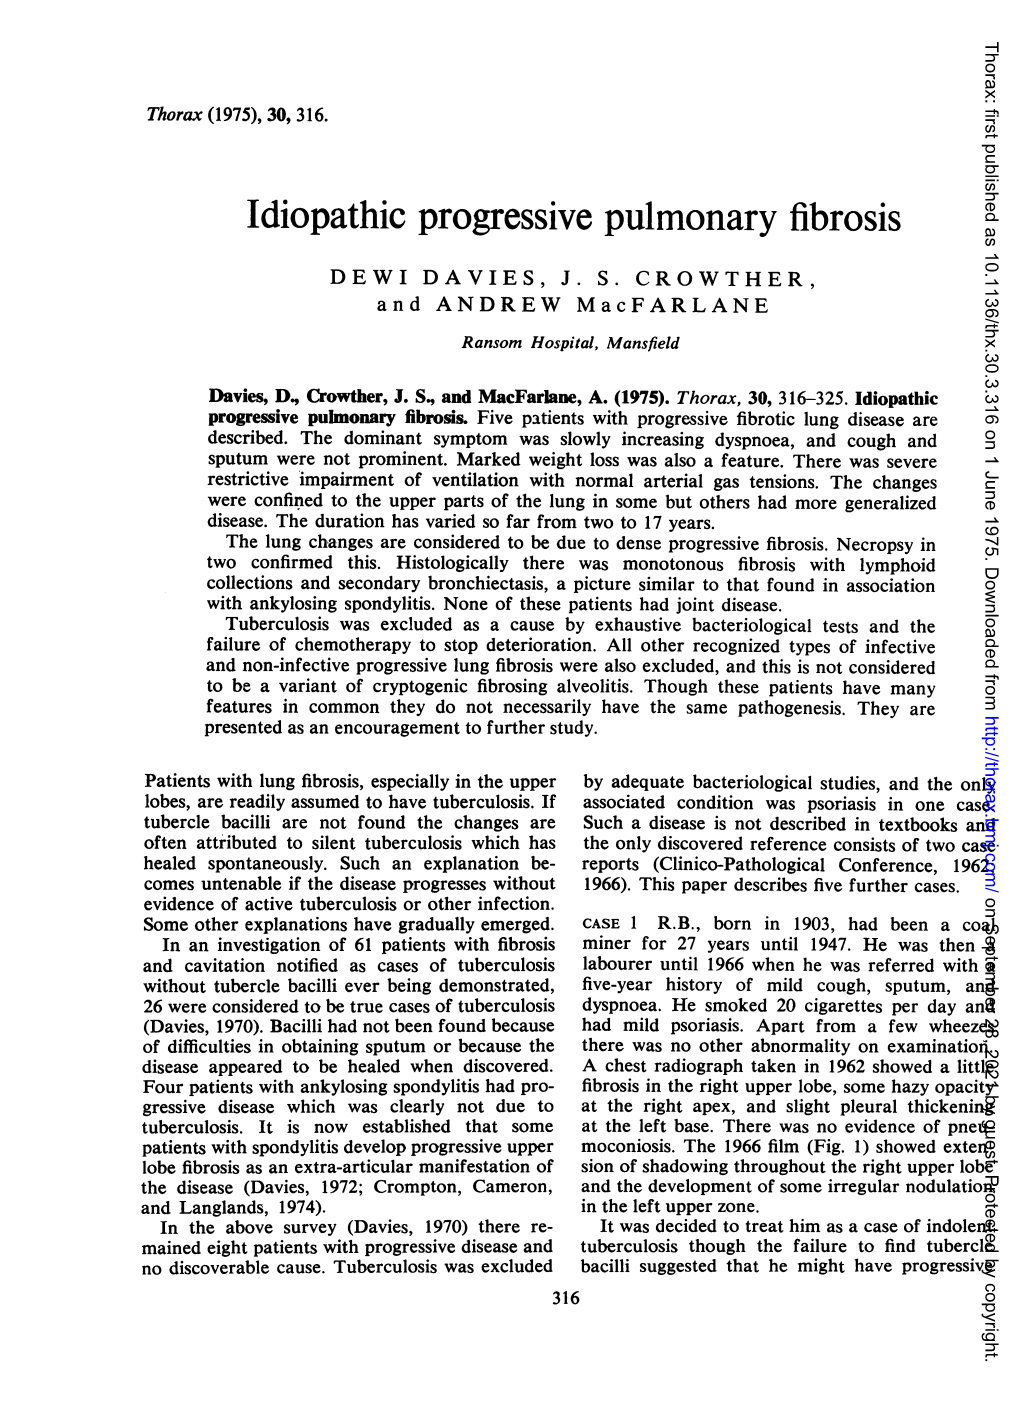 Idiopathic Progressive Pulmonary Fibrosis